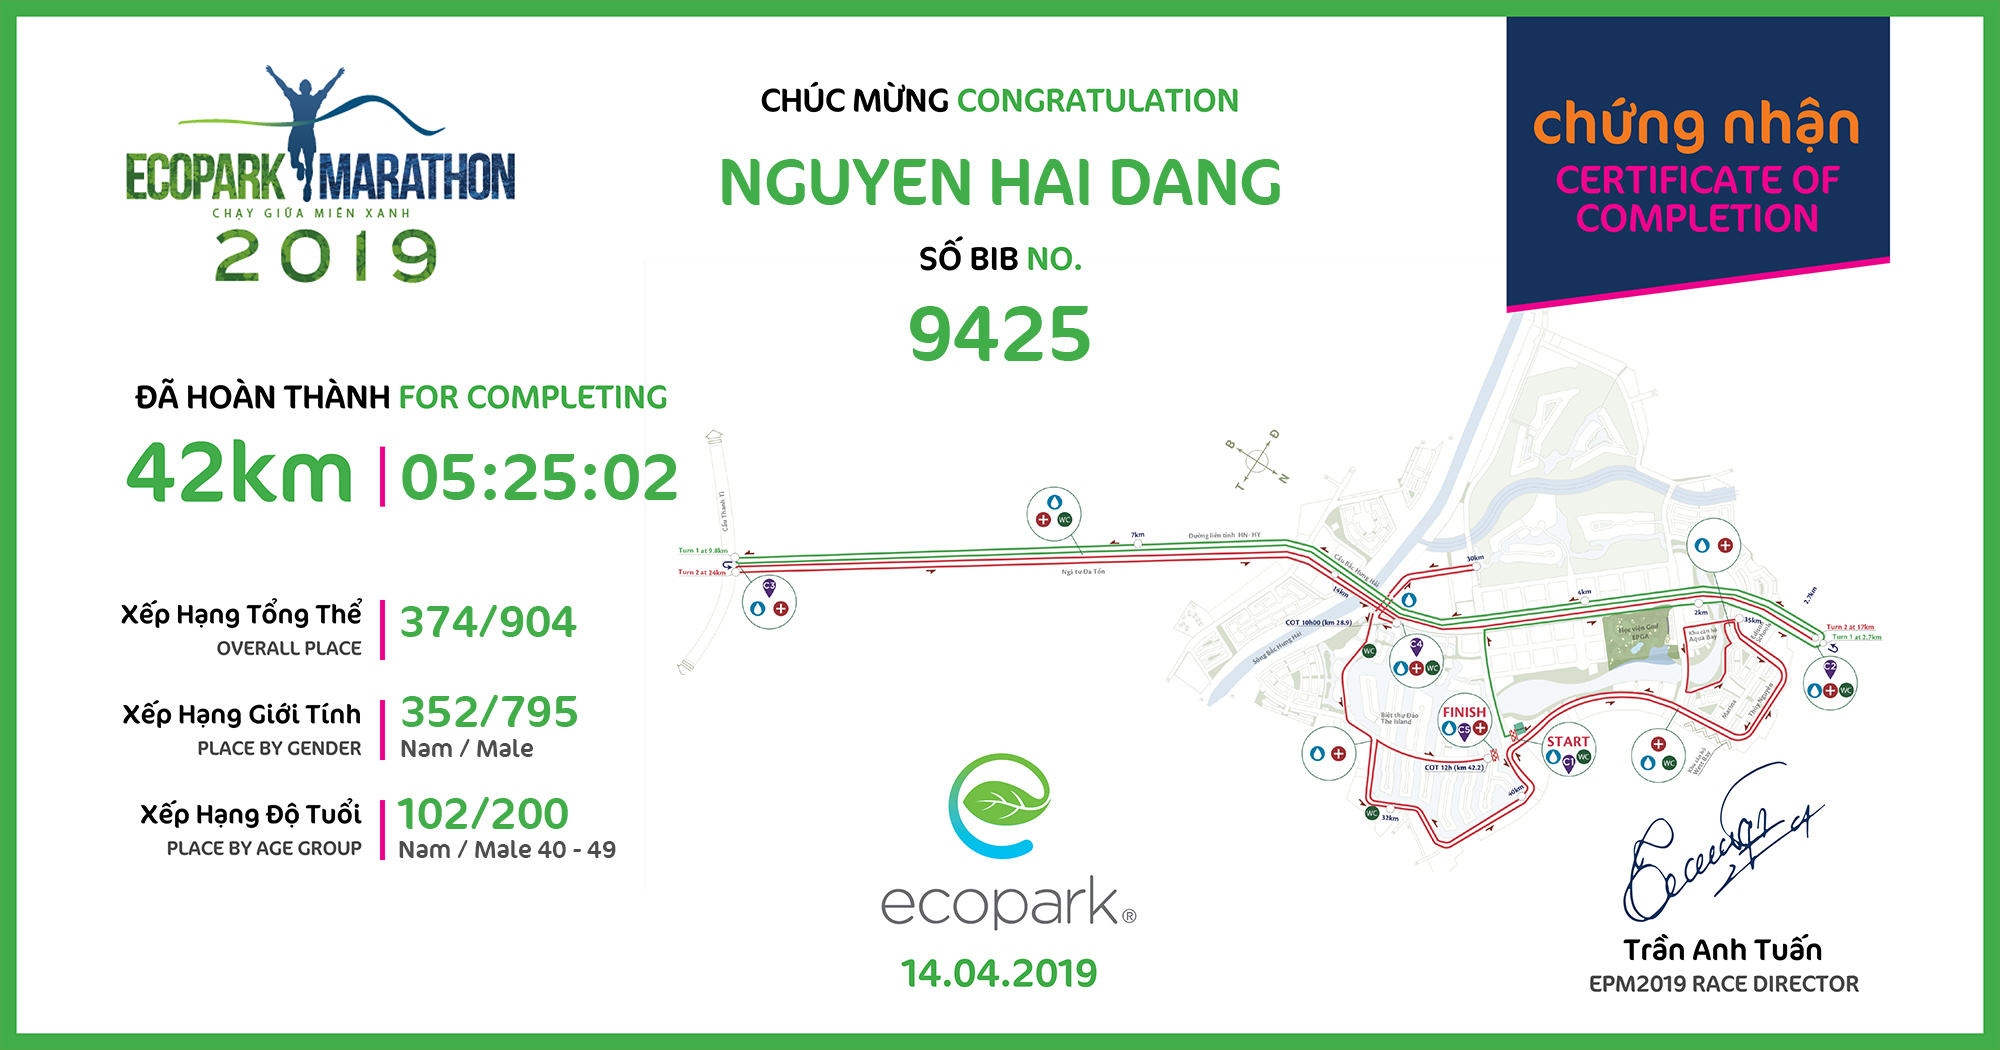 9425 - Nguyen Hai Dang